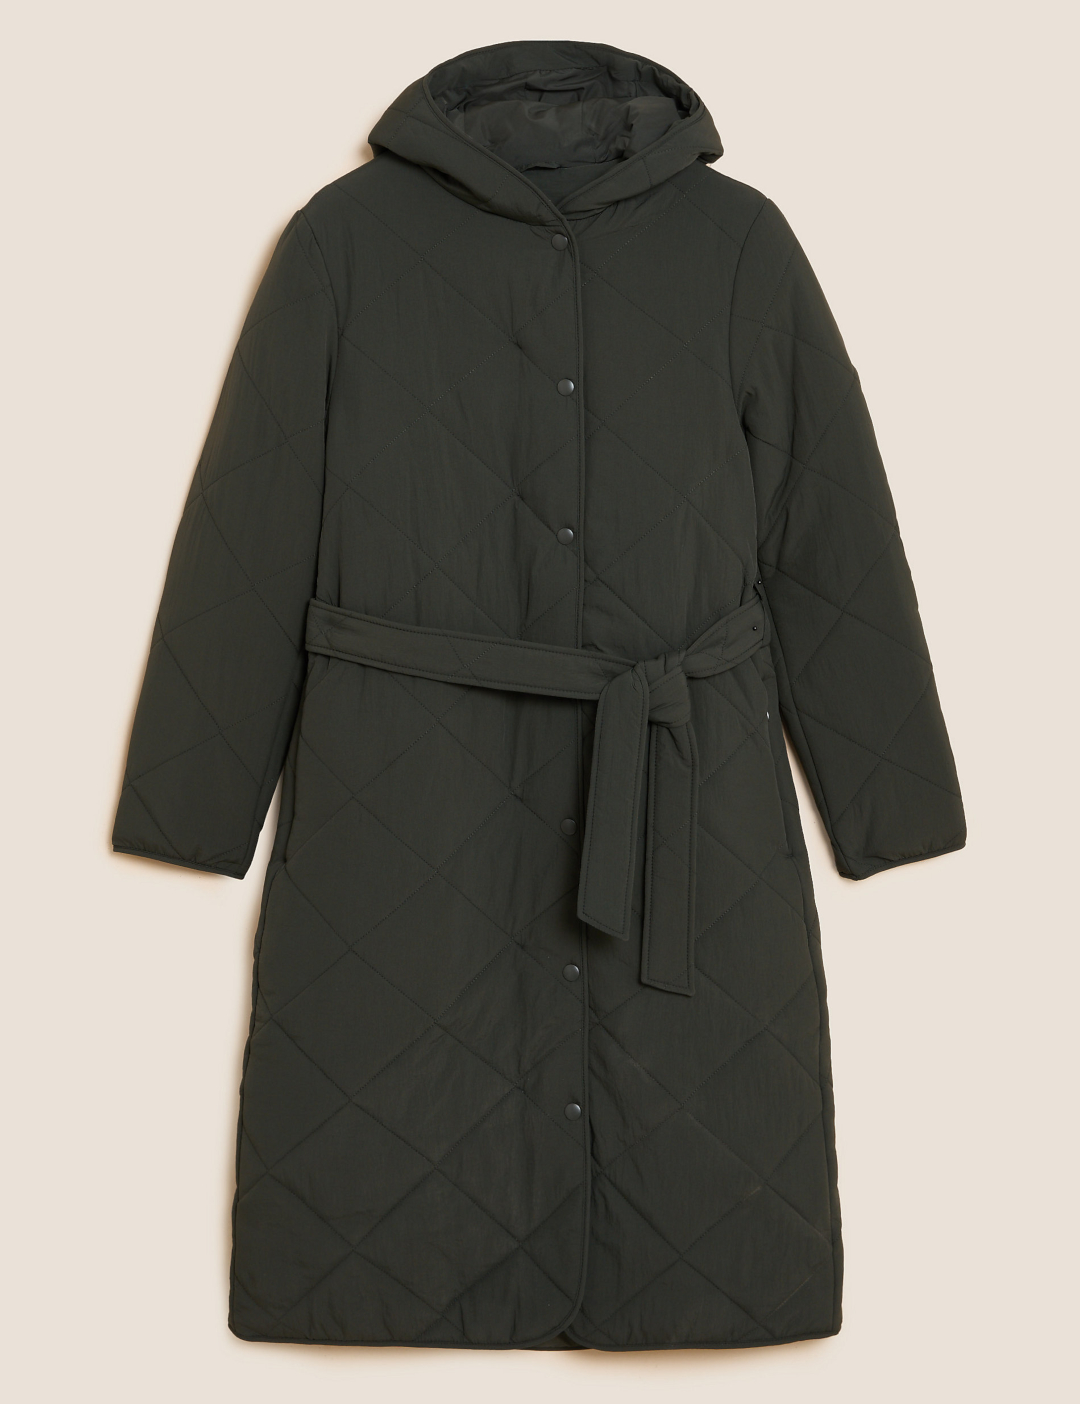 Stormwear™ Coats and Jackets by Marks & Spencer